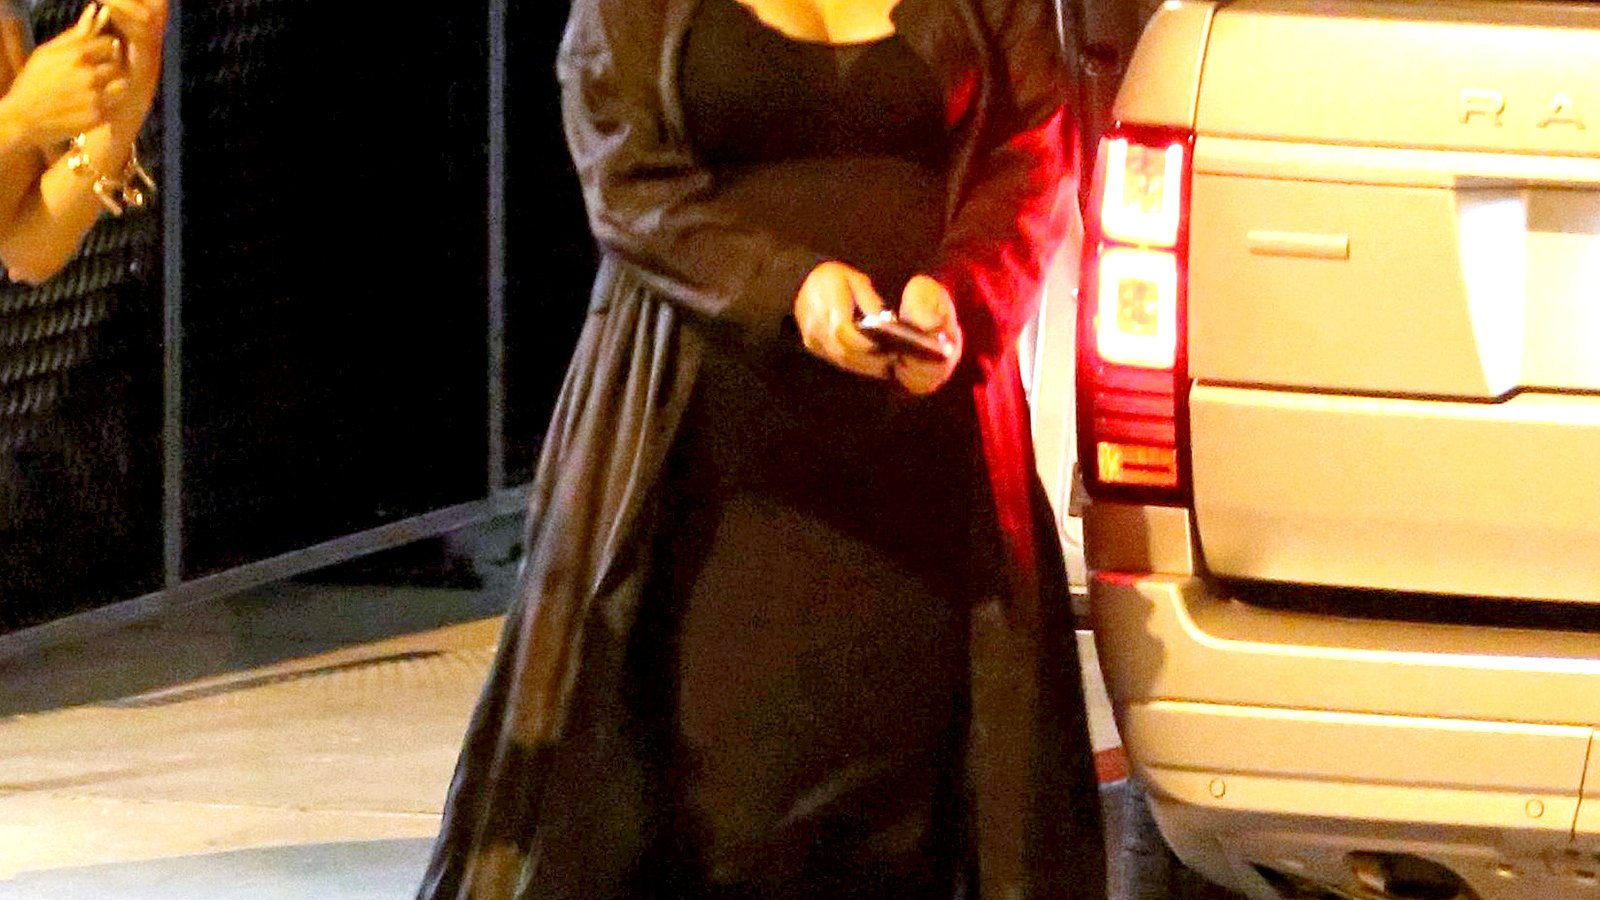 Kim Kardashian has dinner at Bandera with Kanye West and Kris Jenner